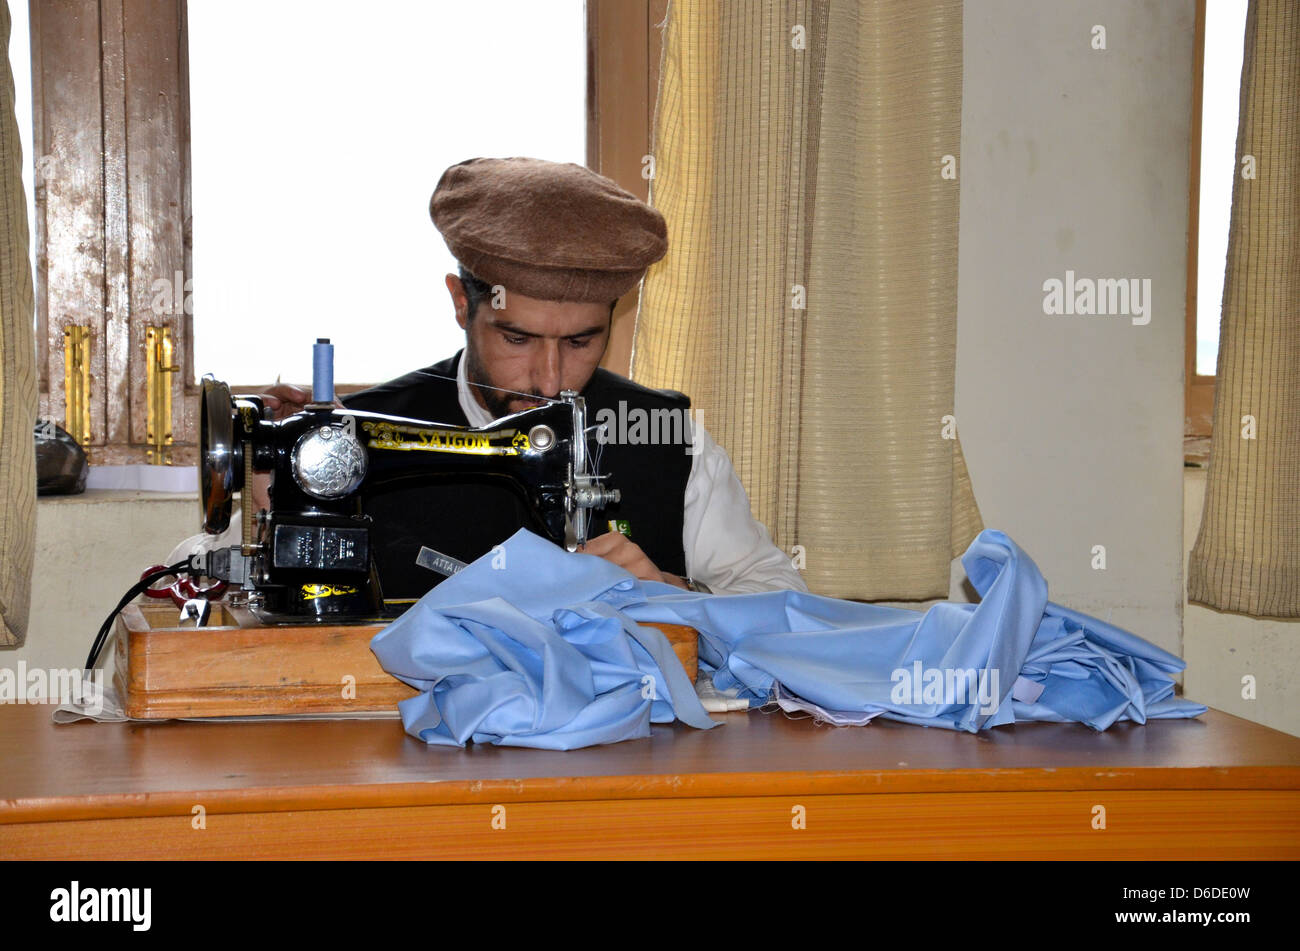 Pakistani Swat Taliban member undergoes rehabilitation at vocational center Stock Photo